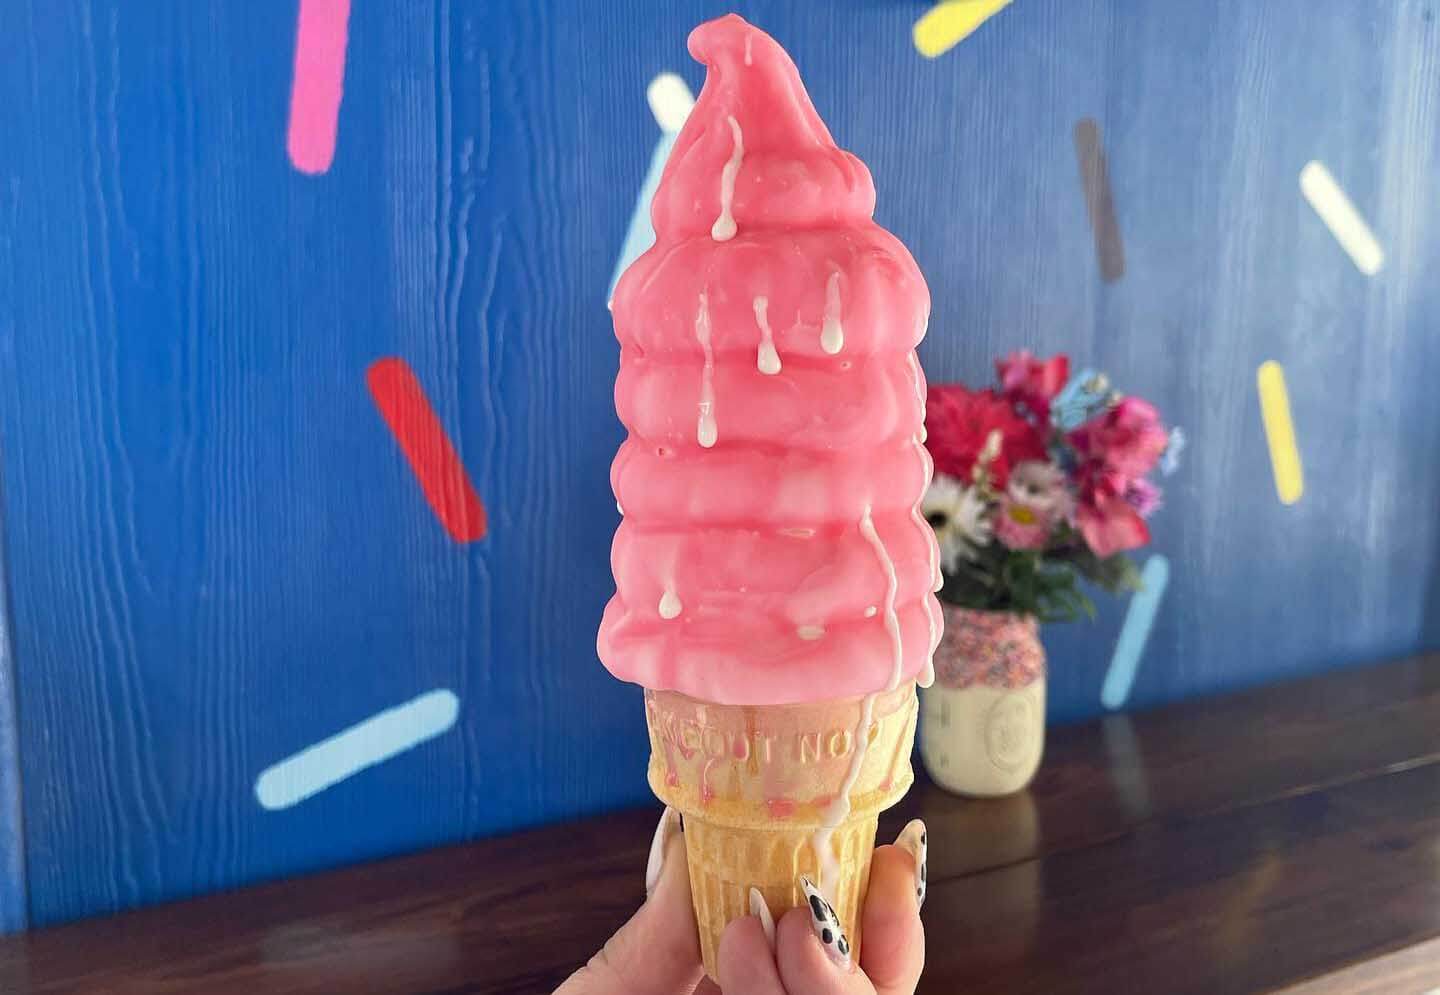 Dipped Cone at a Florida Ice Cream Shop 